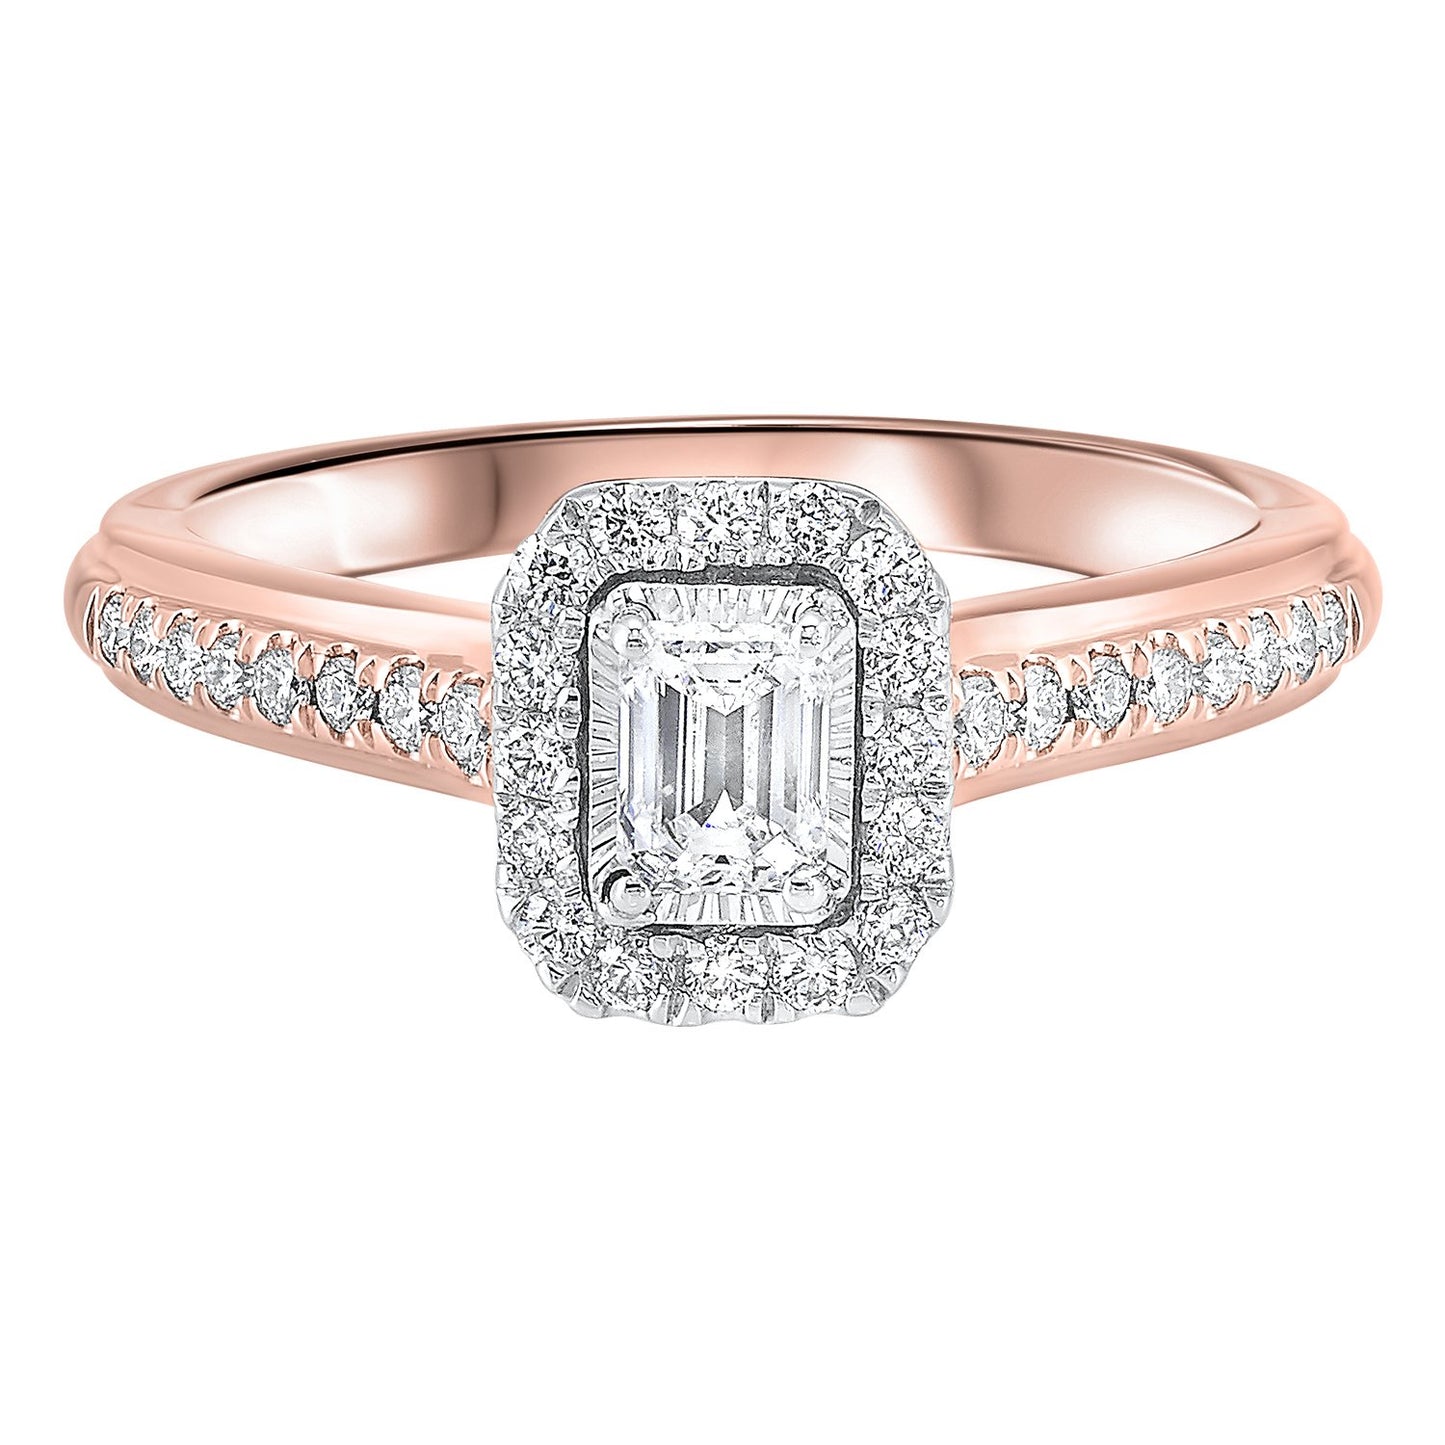 14k rose gold  emerald cut engagement ring